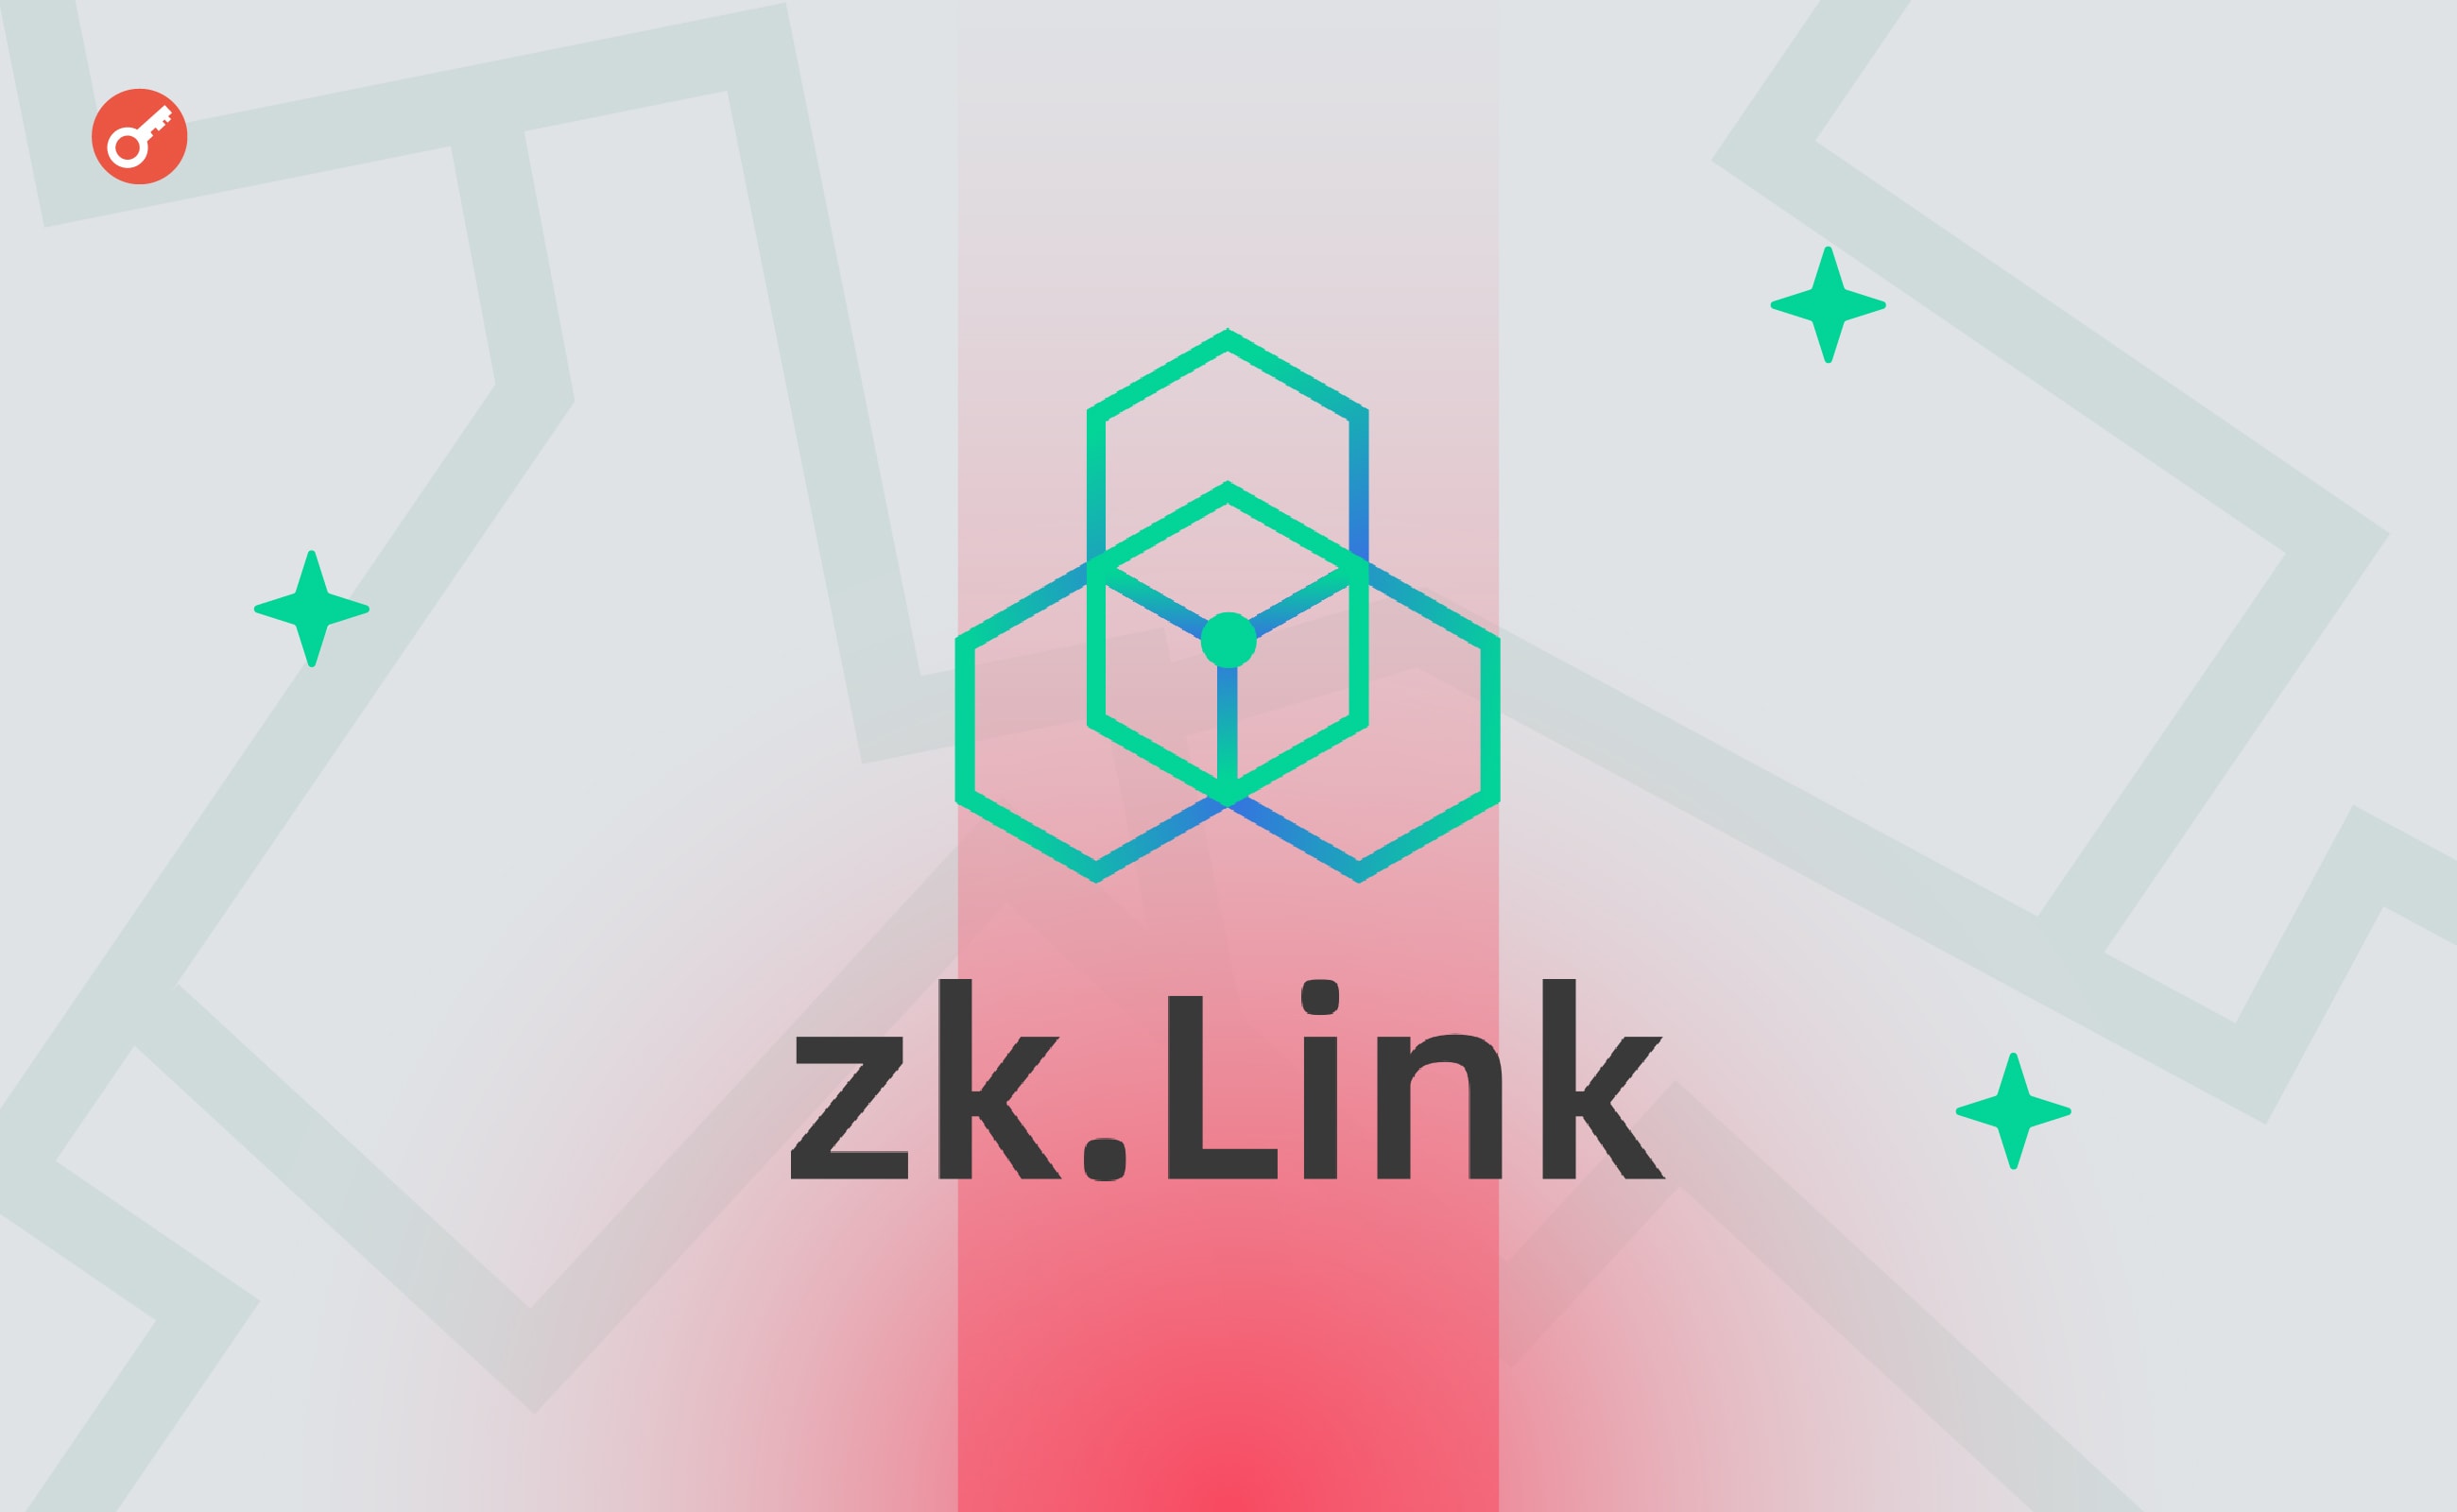 TVL сети zkLink Nova пересекла отметку в $1 млрд